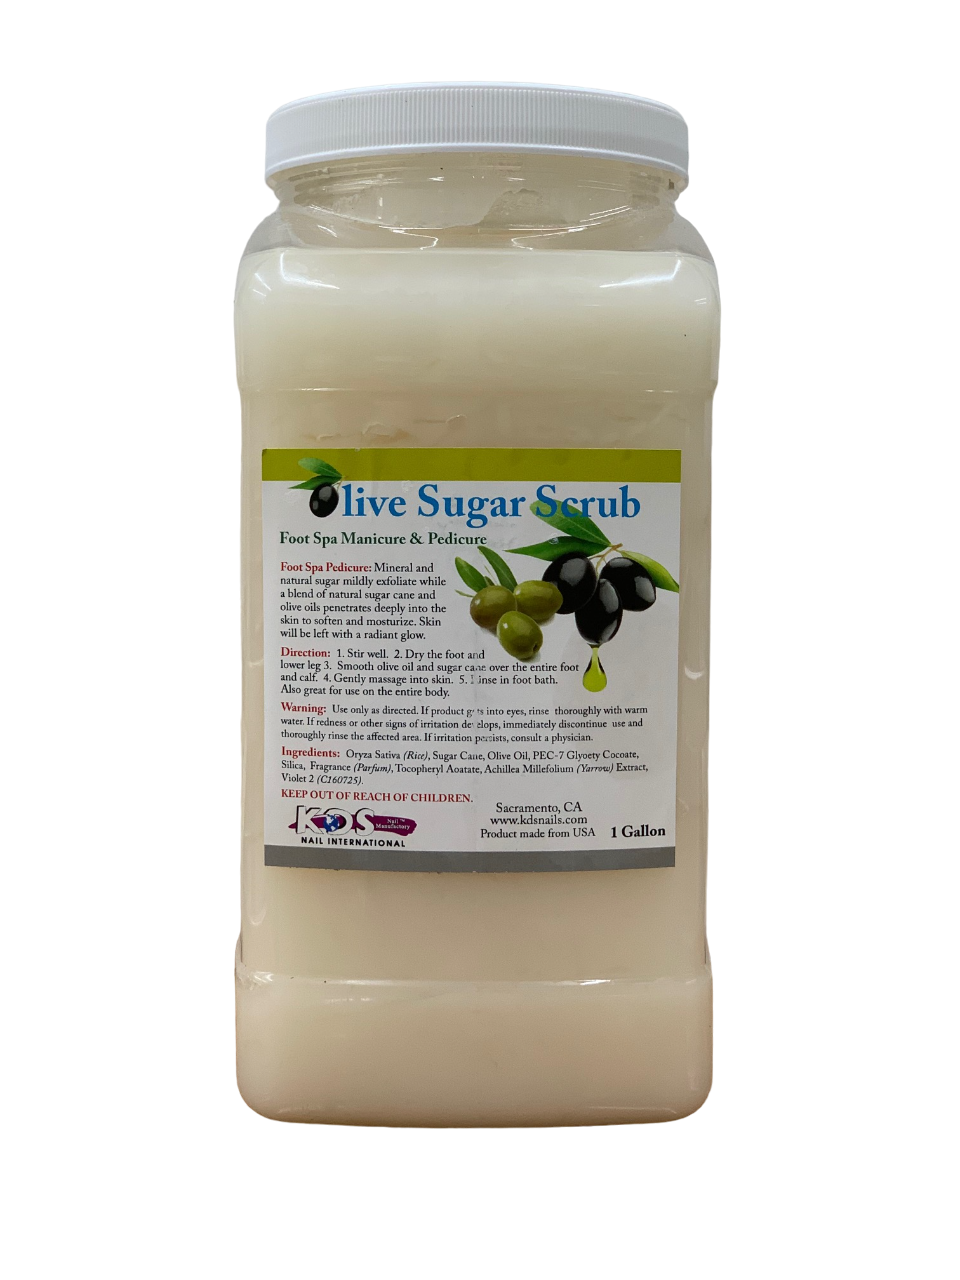 KDS Sugar Scrub Olive